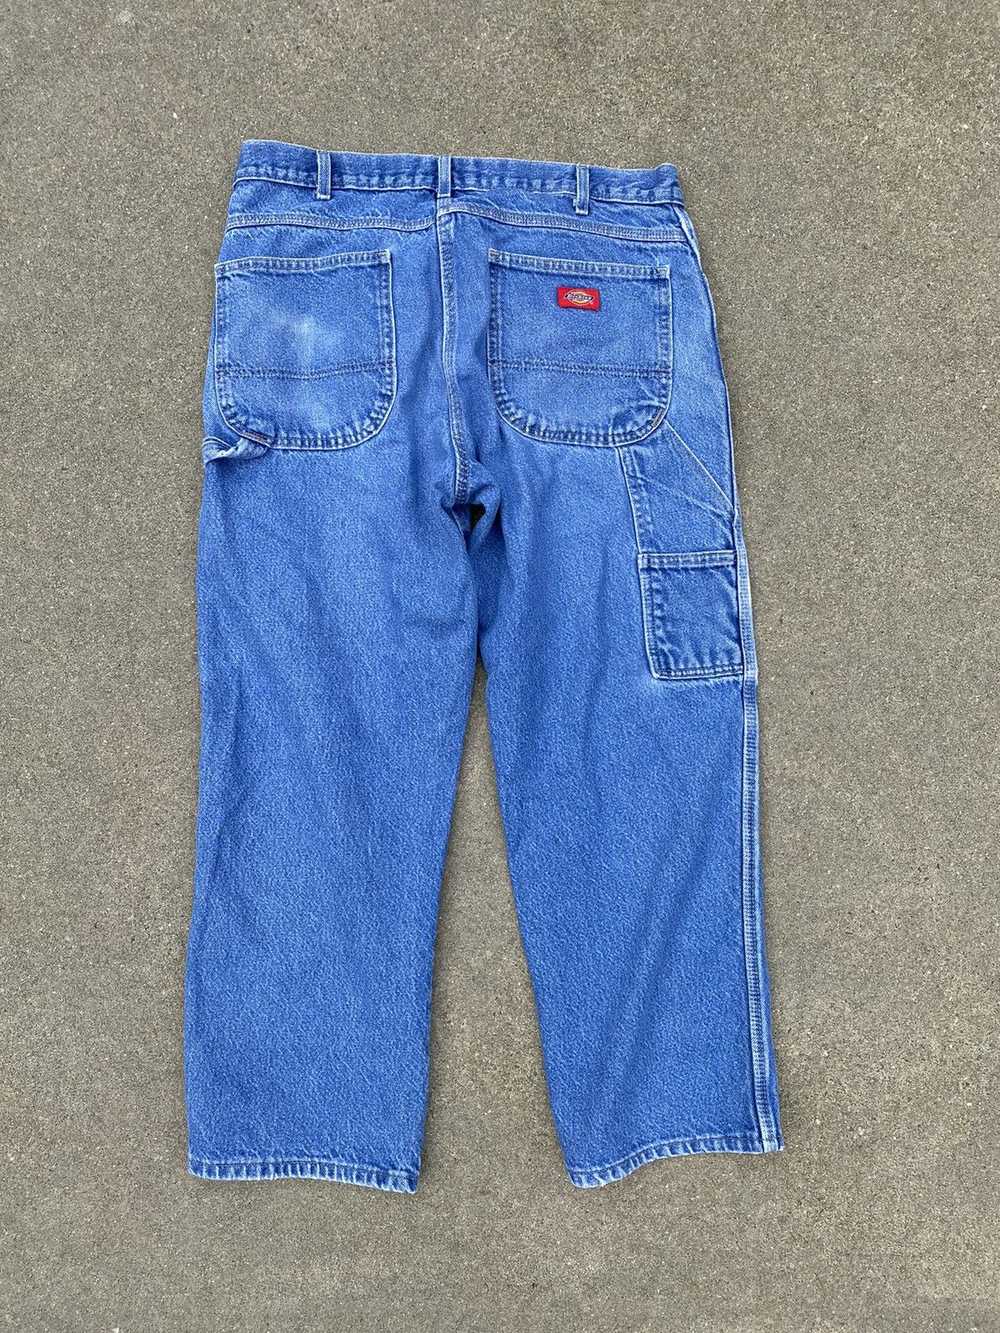 Carhartt × Dickies dickies carpenter blue jeans c… - image 2